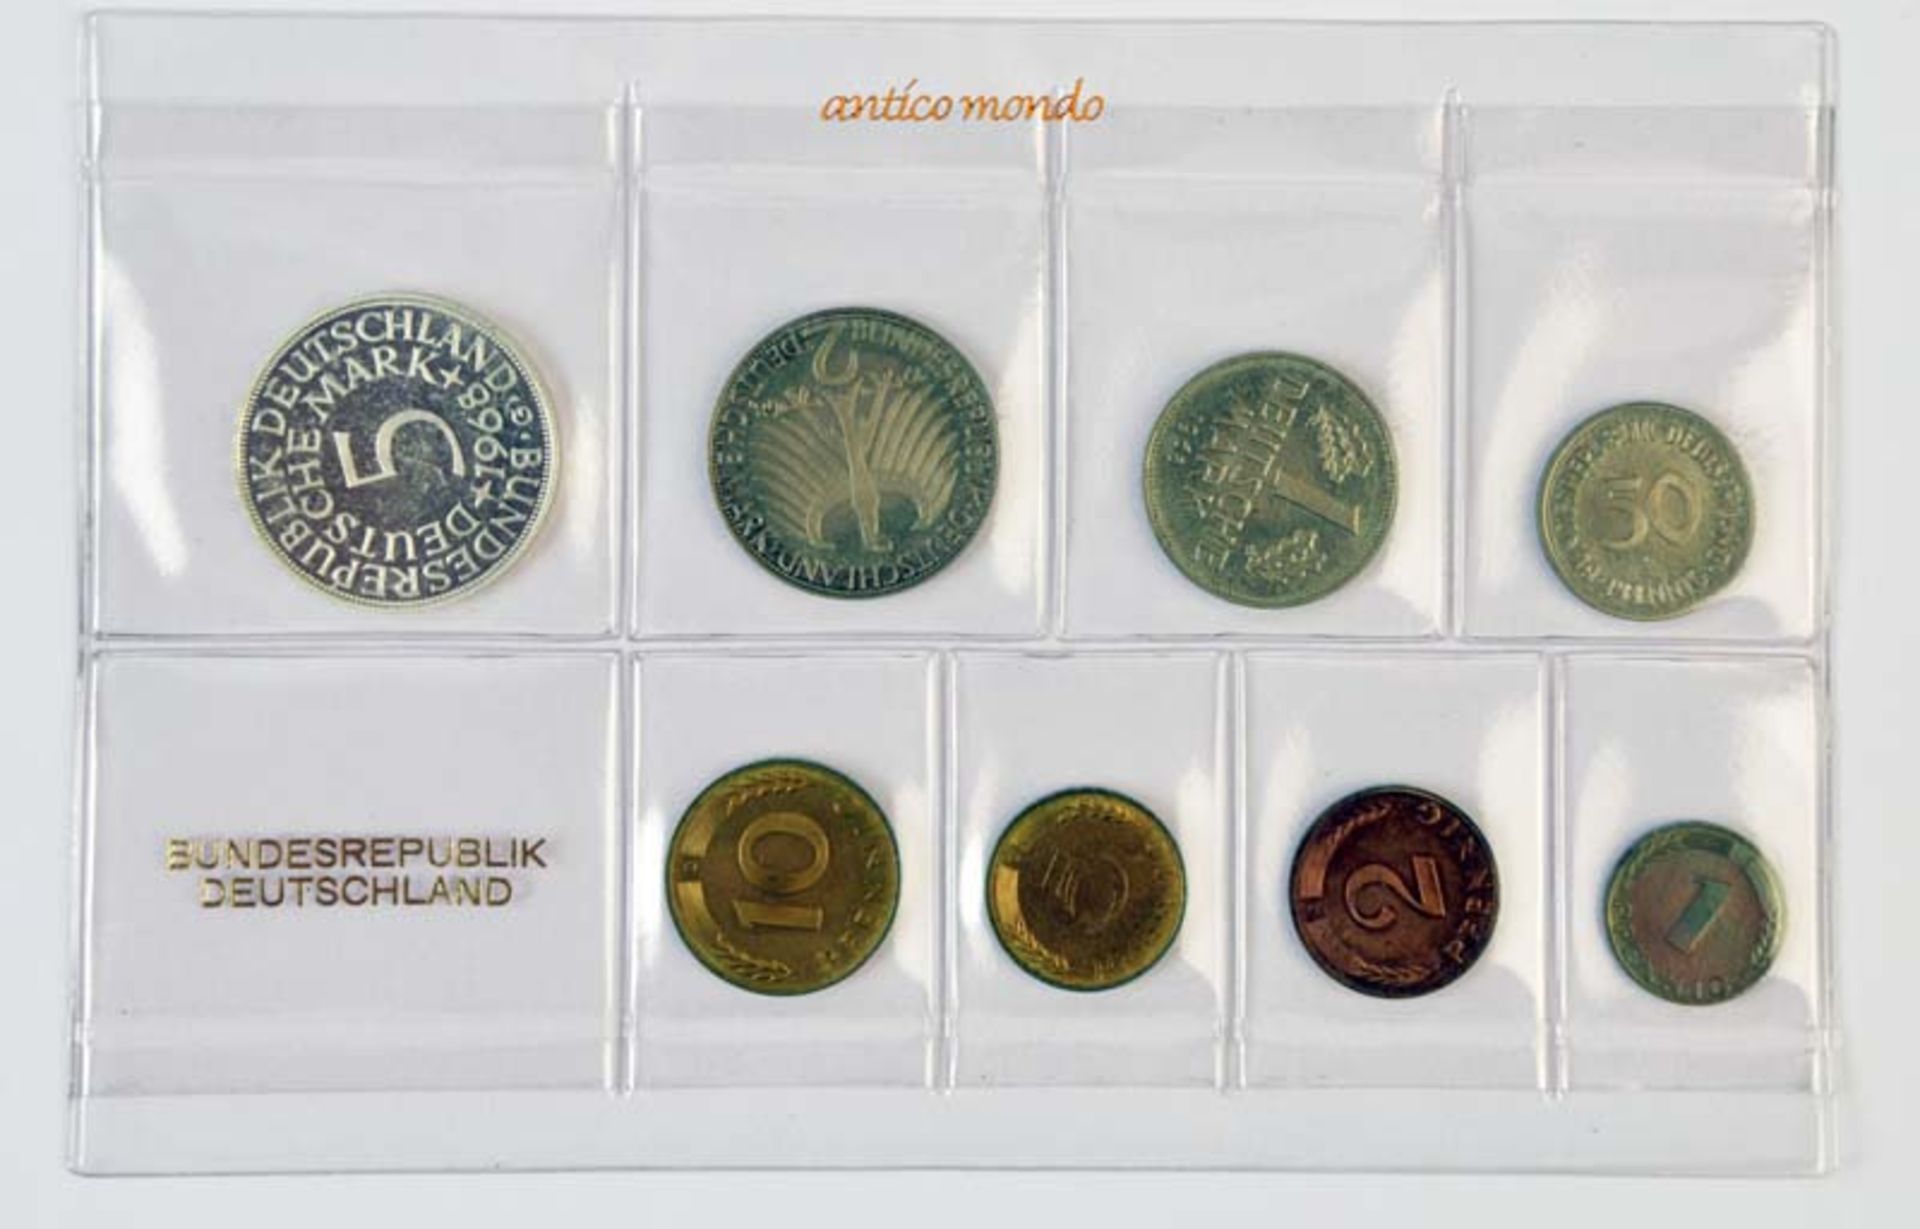 Bundesrepublik, Kursmünzensatz, 1968 G (2 Pf. Bronze), original verschweißt, prägefrisch- - -21.50 %